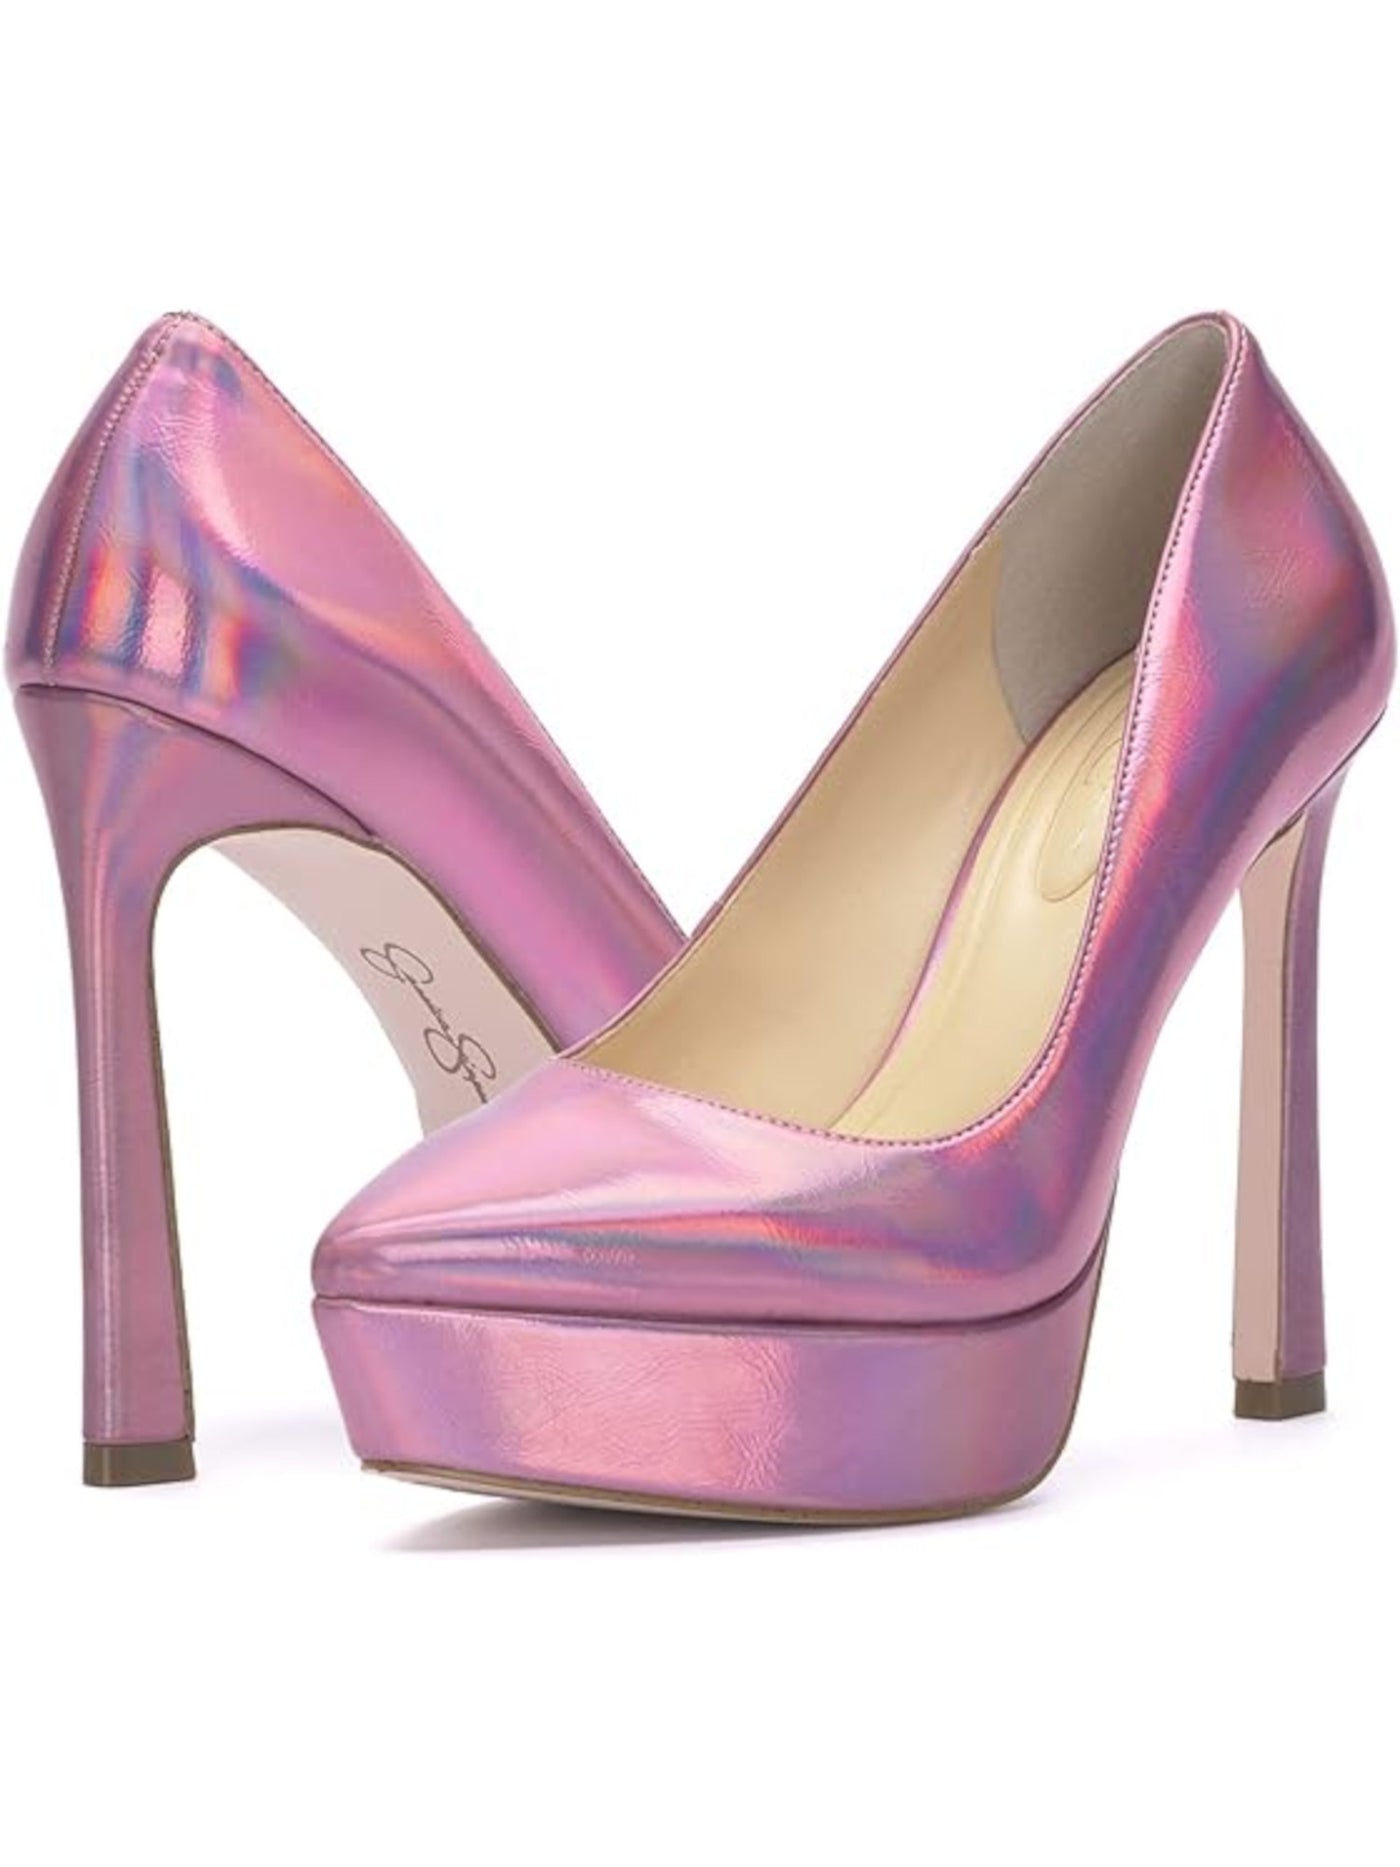 JESSICA SIMPSON Womens Pink 1" Platform Cushioned Jariah Pointed Toe Platform Slip On Dress Pumps Shoes 7 M